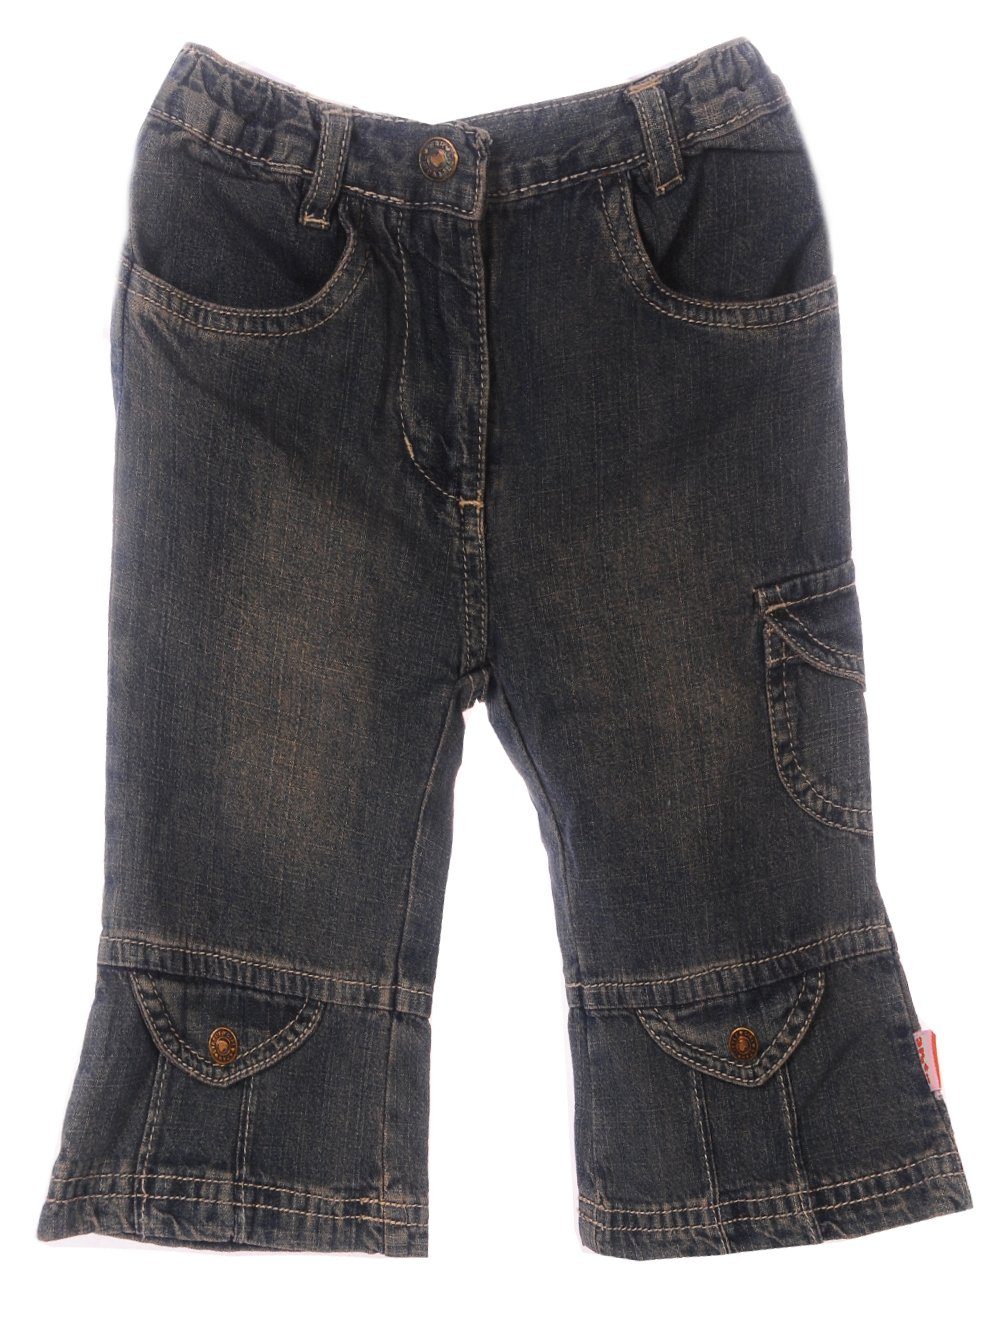 Hose & Shorts Baby Hose Jeans leichte Jeanshose 86 74 80 86 | Baby-Sets